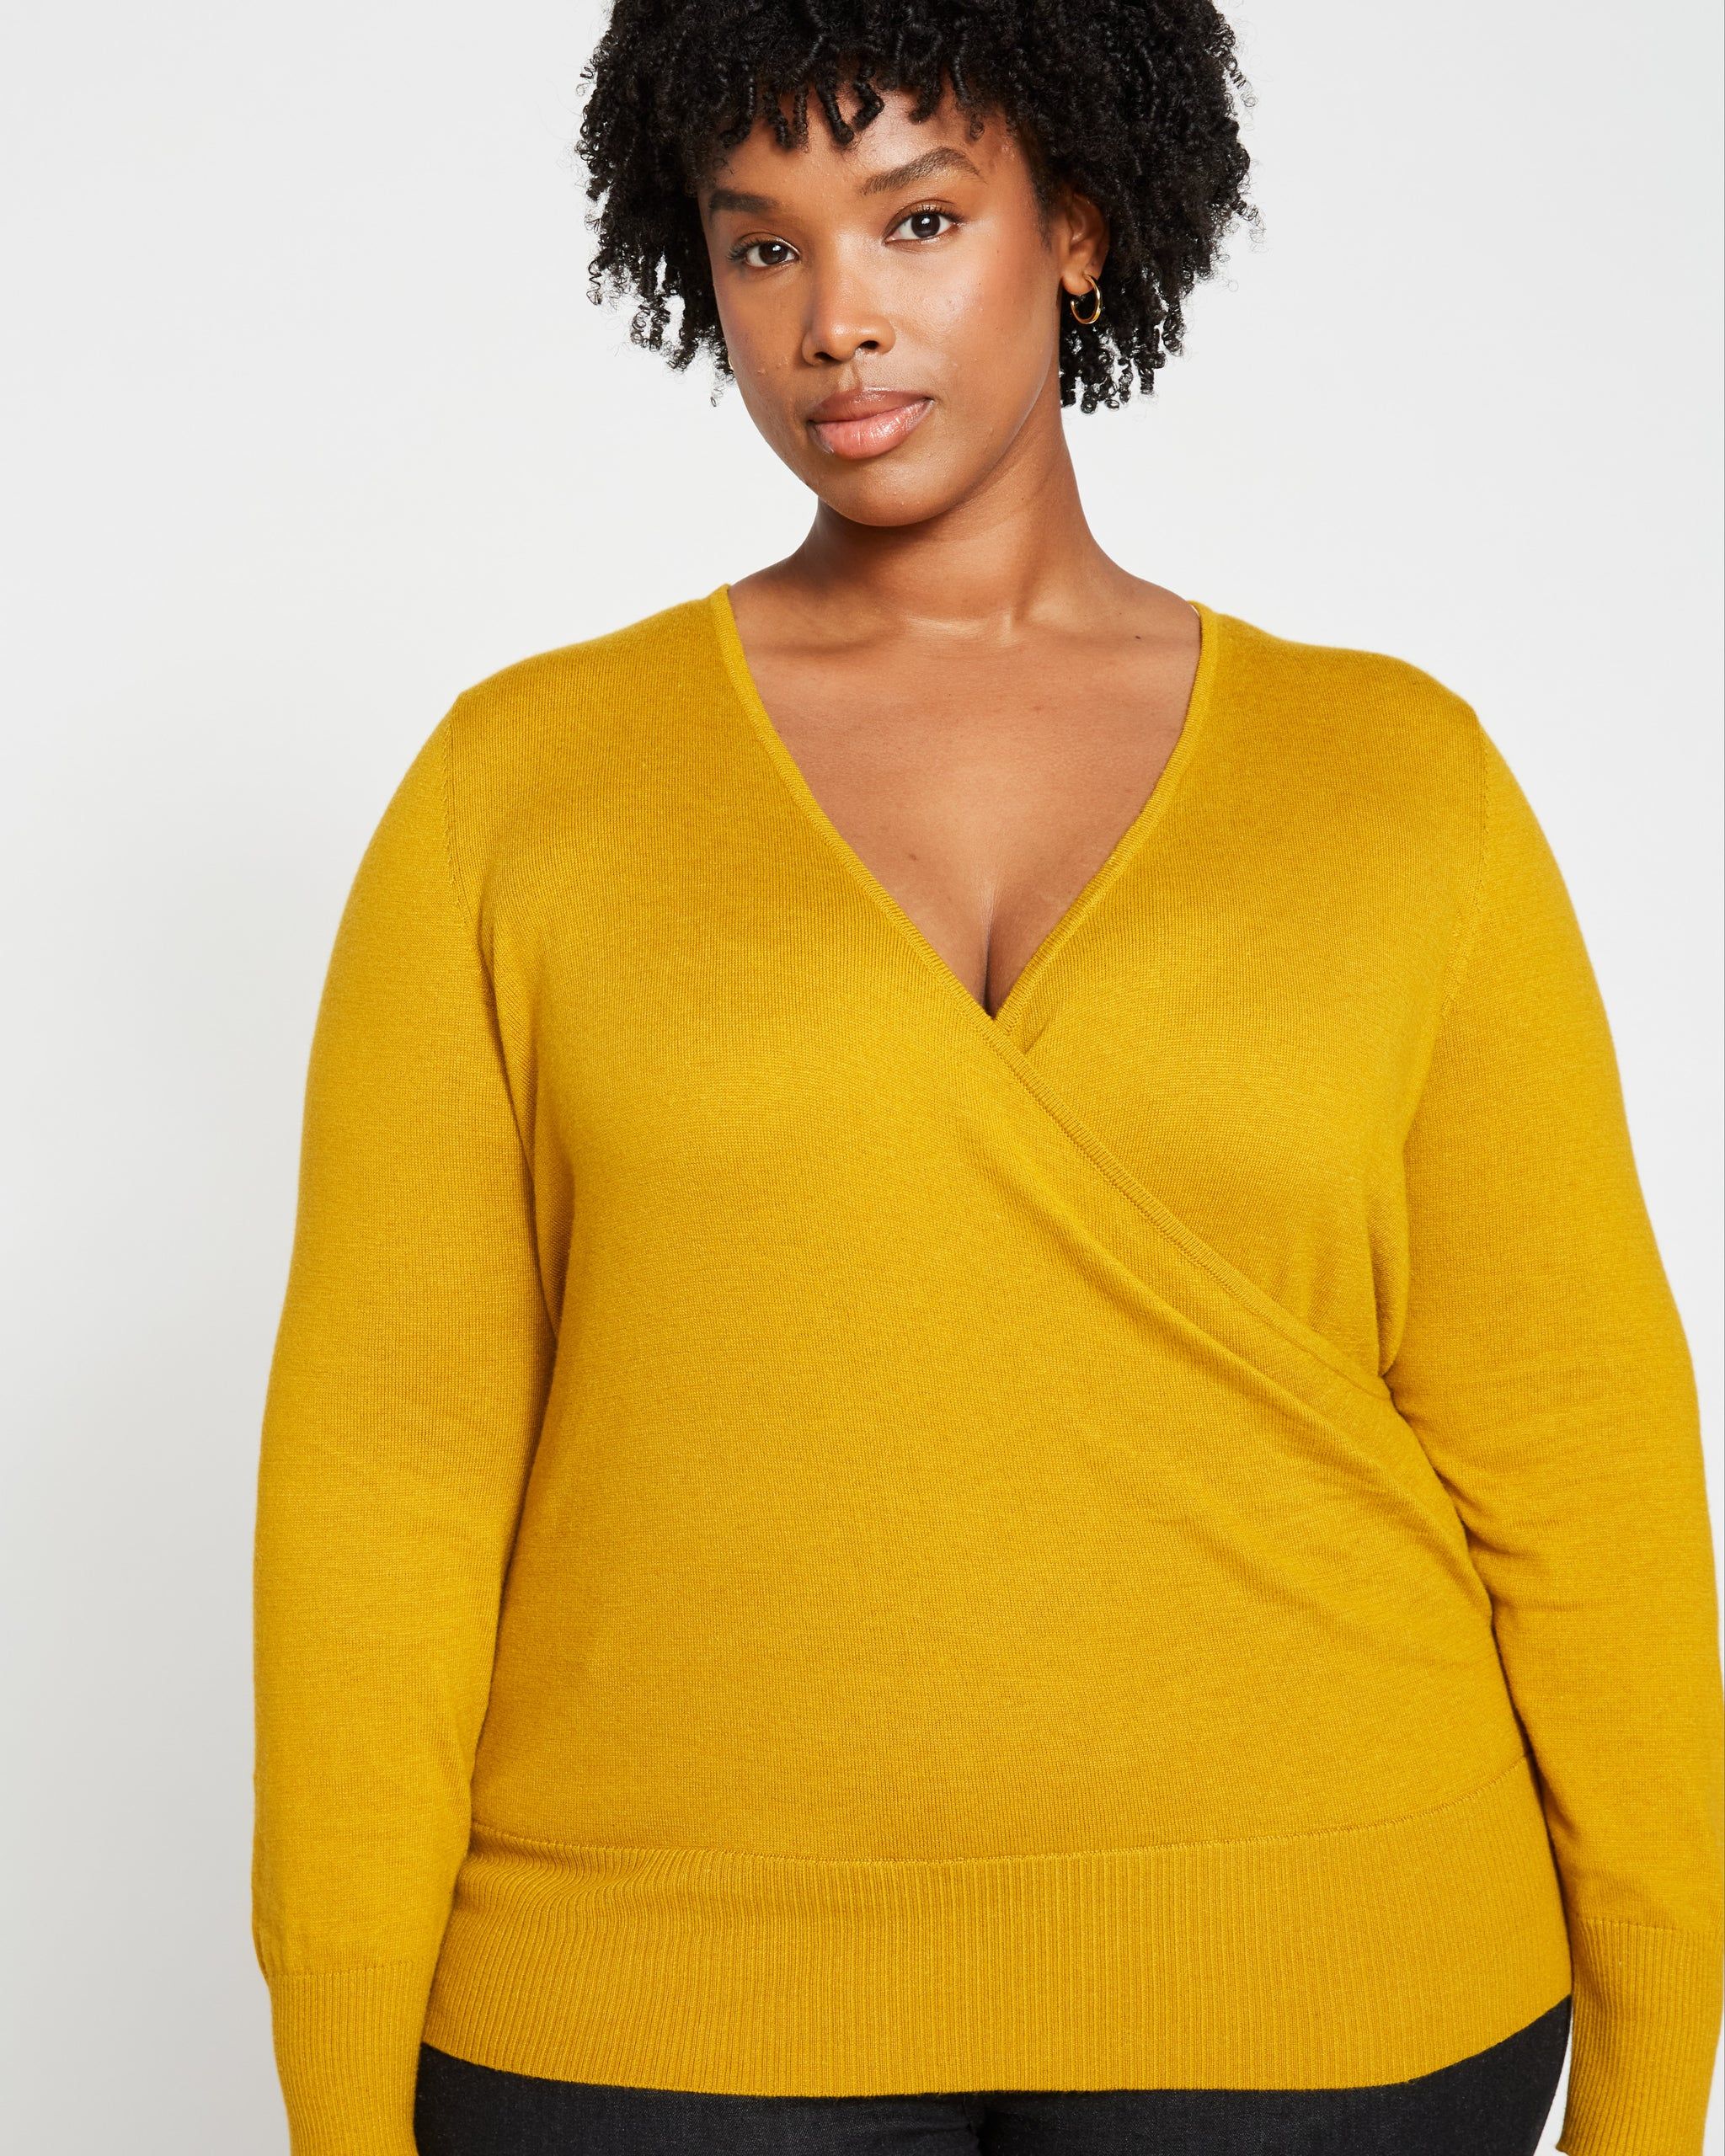 Statement Wrap Sweater - Mustard | Universal Standard